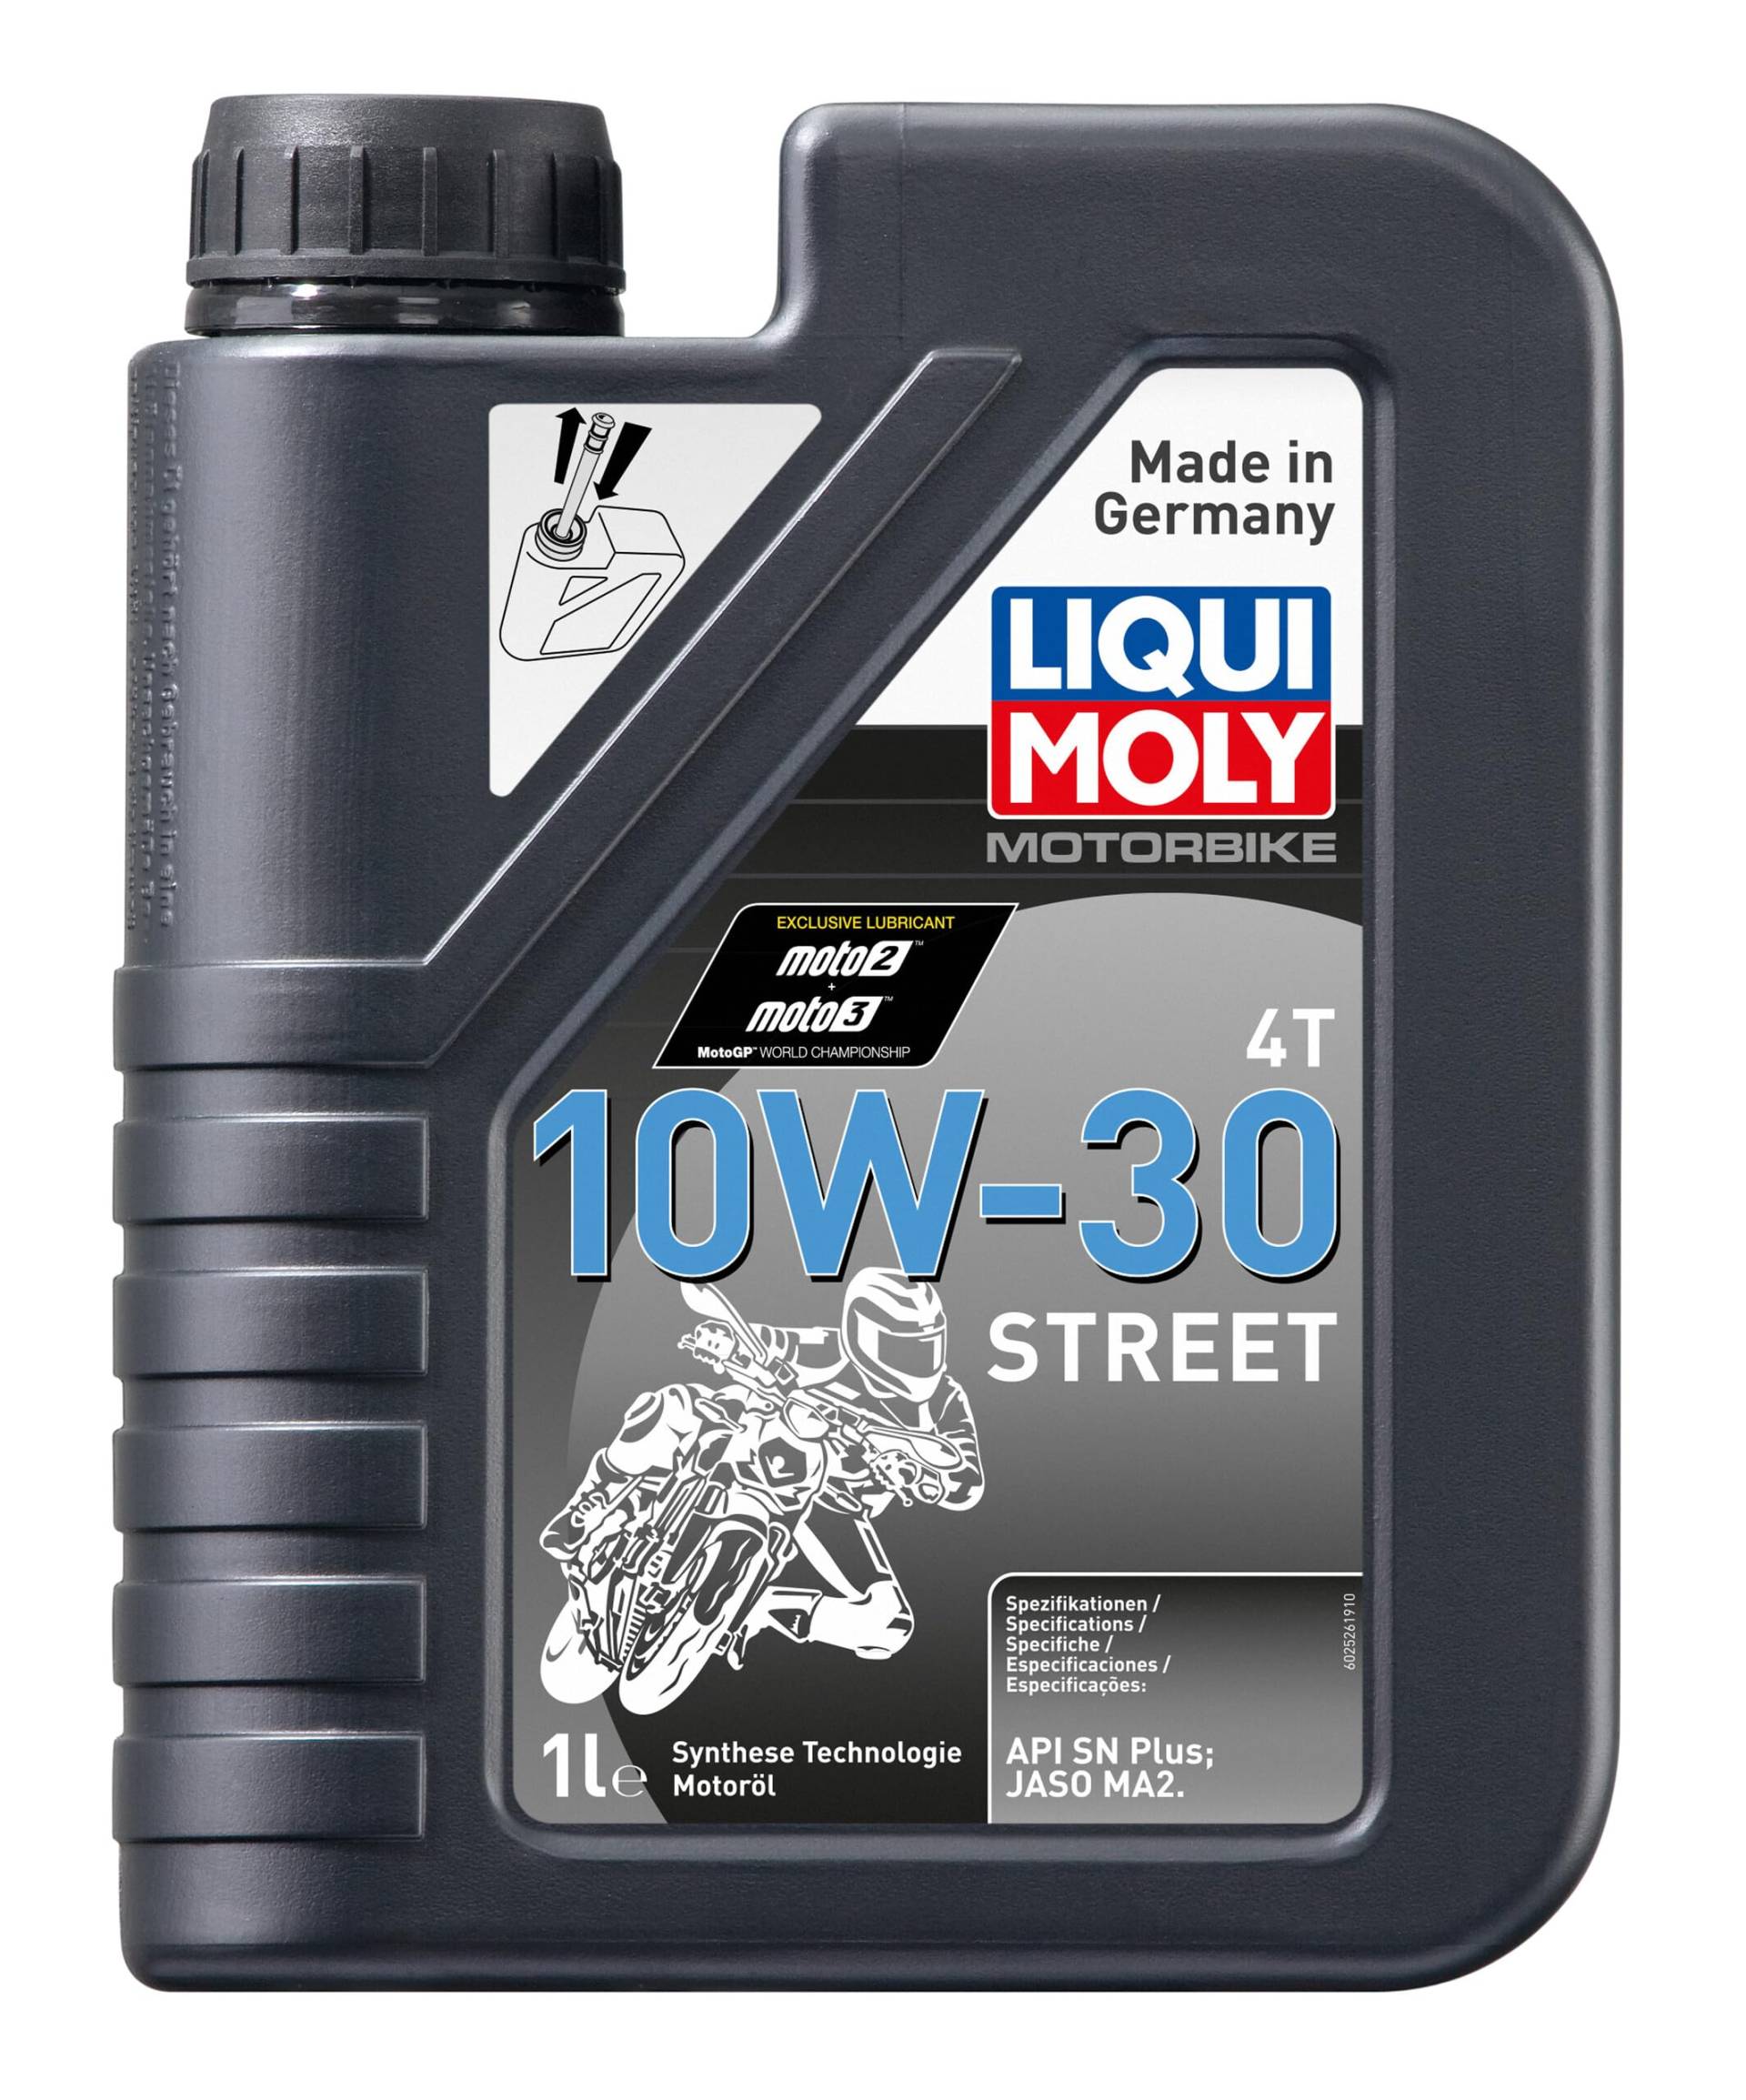 LIQUI MOLY Motorbike 4T 10W-30 Street | 1 L | Motorrad Synthesetechnologie Motoröl | Art.-Nr.: 2526 von Liqui Moly